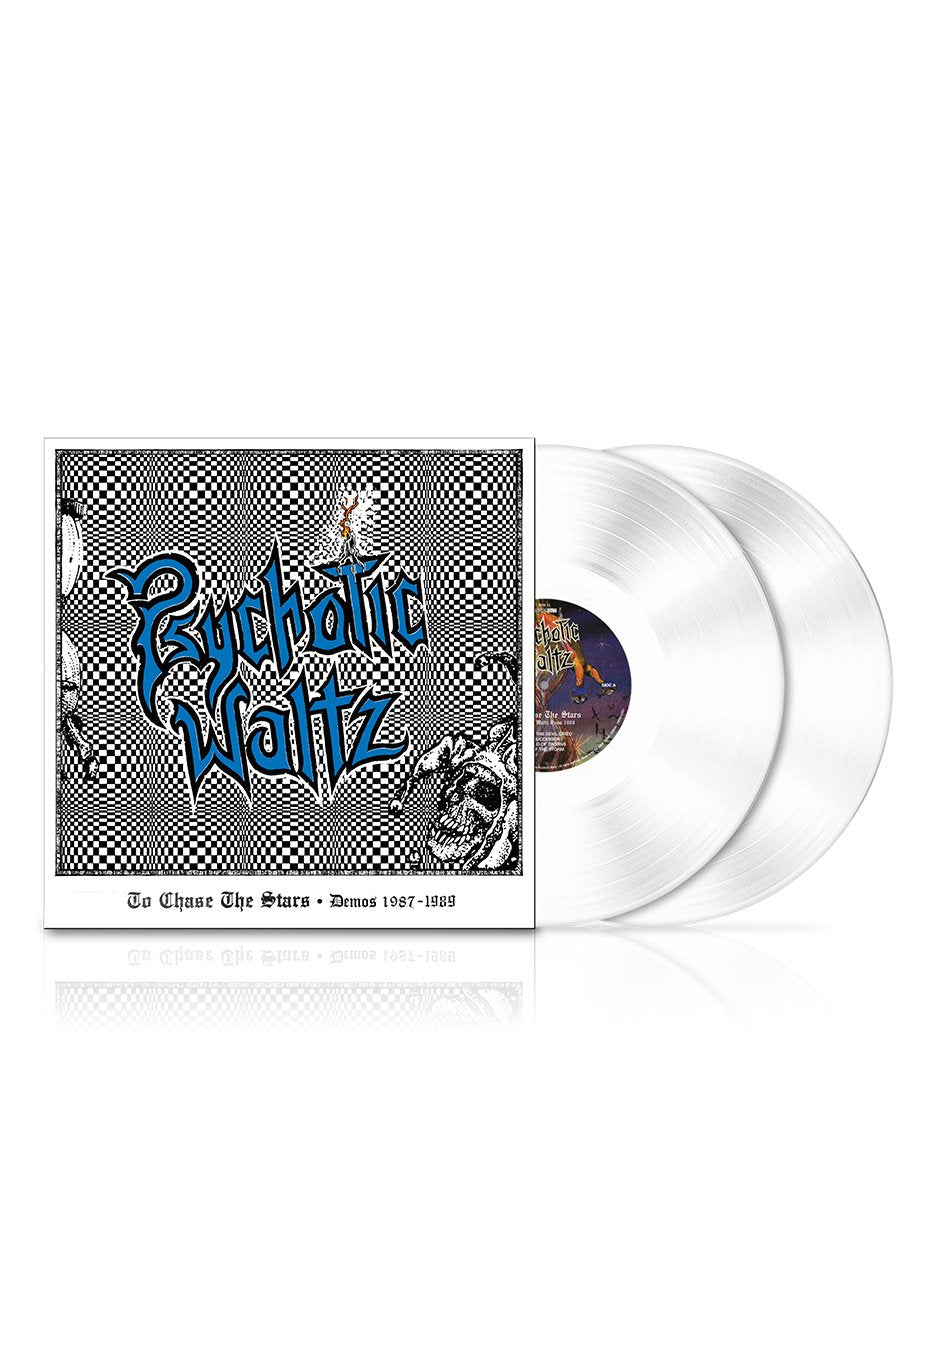 Psychotic Waltz - To Chase The Stars (Demos 1987 - 1989) Ltd. White - Colored 2 Vinyl